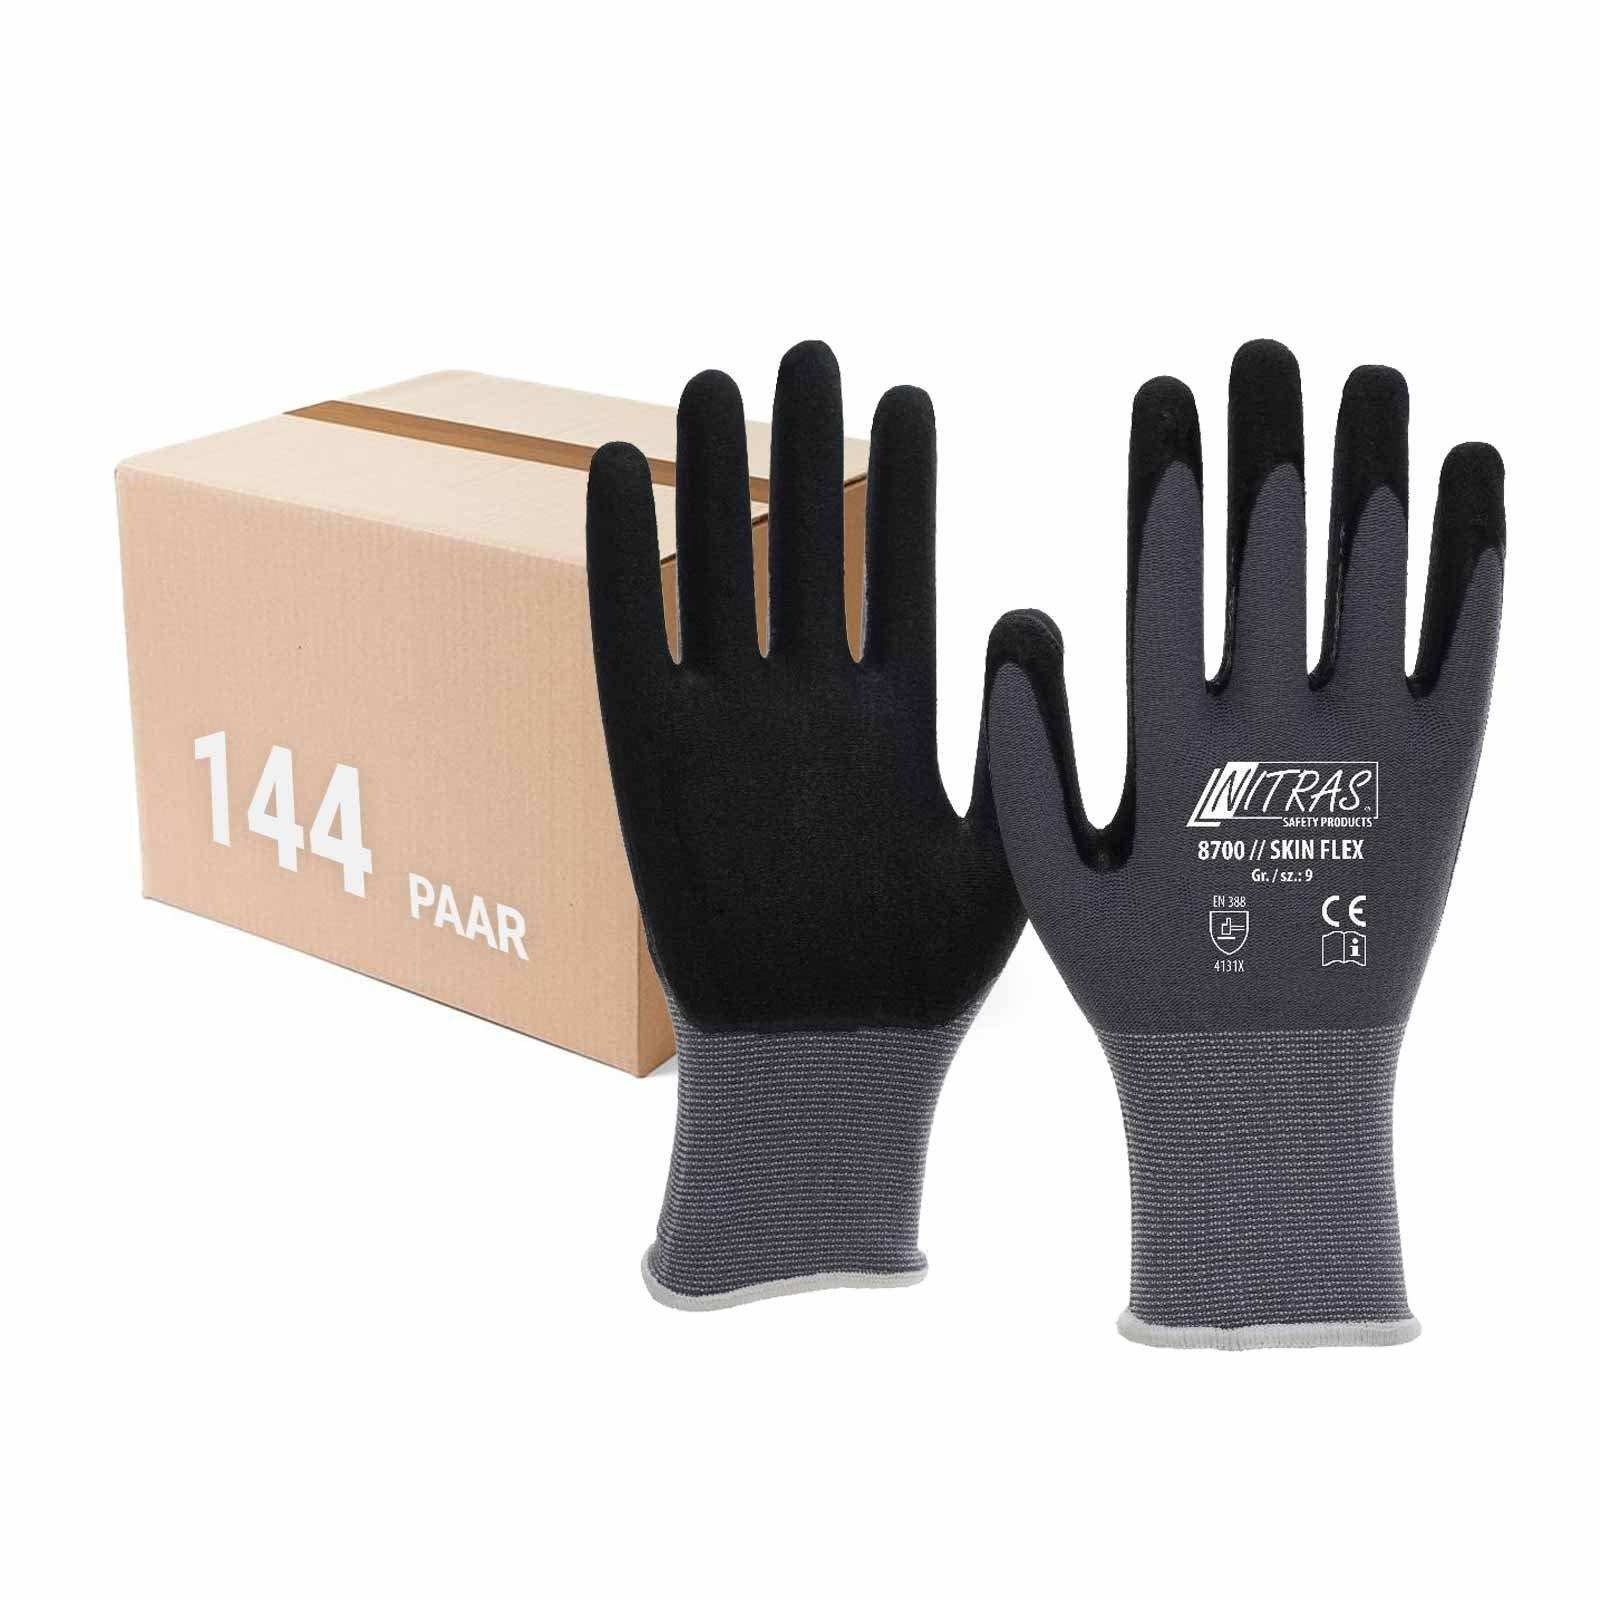 Skin-Flex Nitras Nitril-Handschuhe Handschuhe NITRAS Paar 8700 gestrickte Strickhandschuhe -144 (Spar-Set)